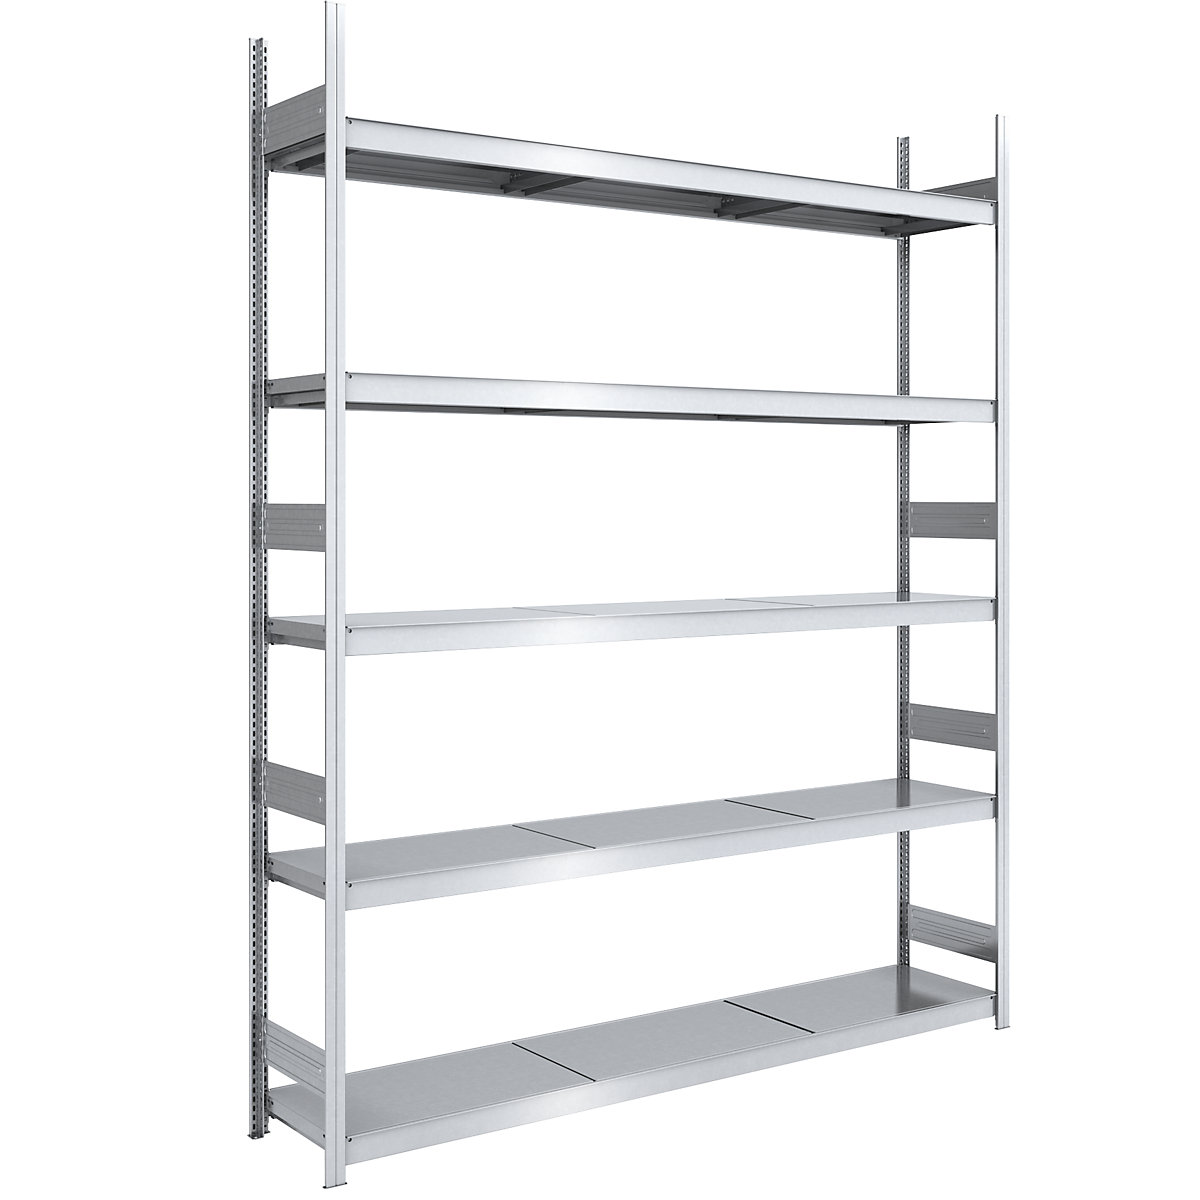 Wide span boltless shelving unit, zinc plated – hofe, shelf WxD 2250 x 500 mm, standard shelf unit, 5 steel shelves, height 3000 mm